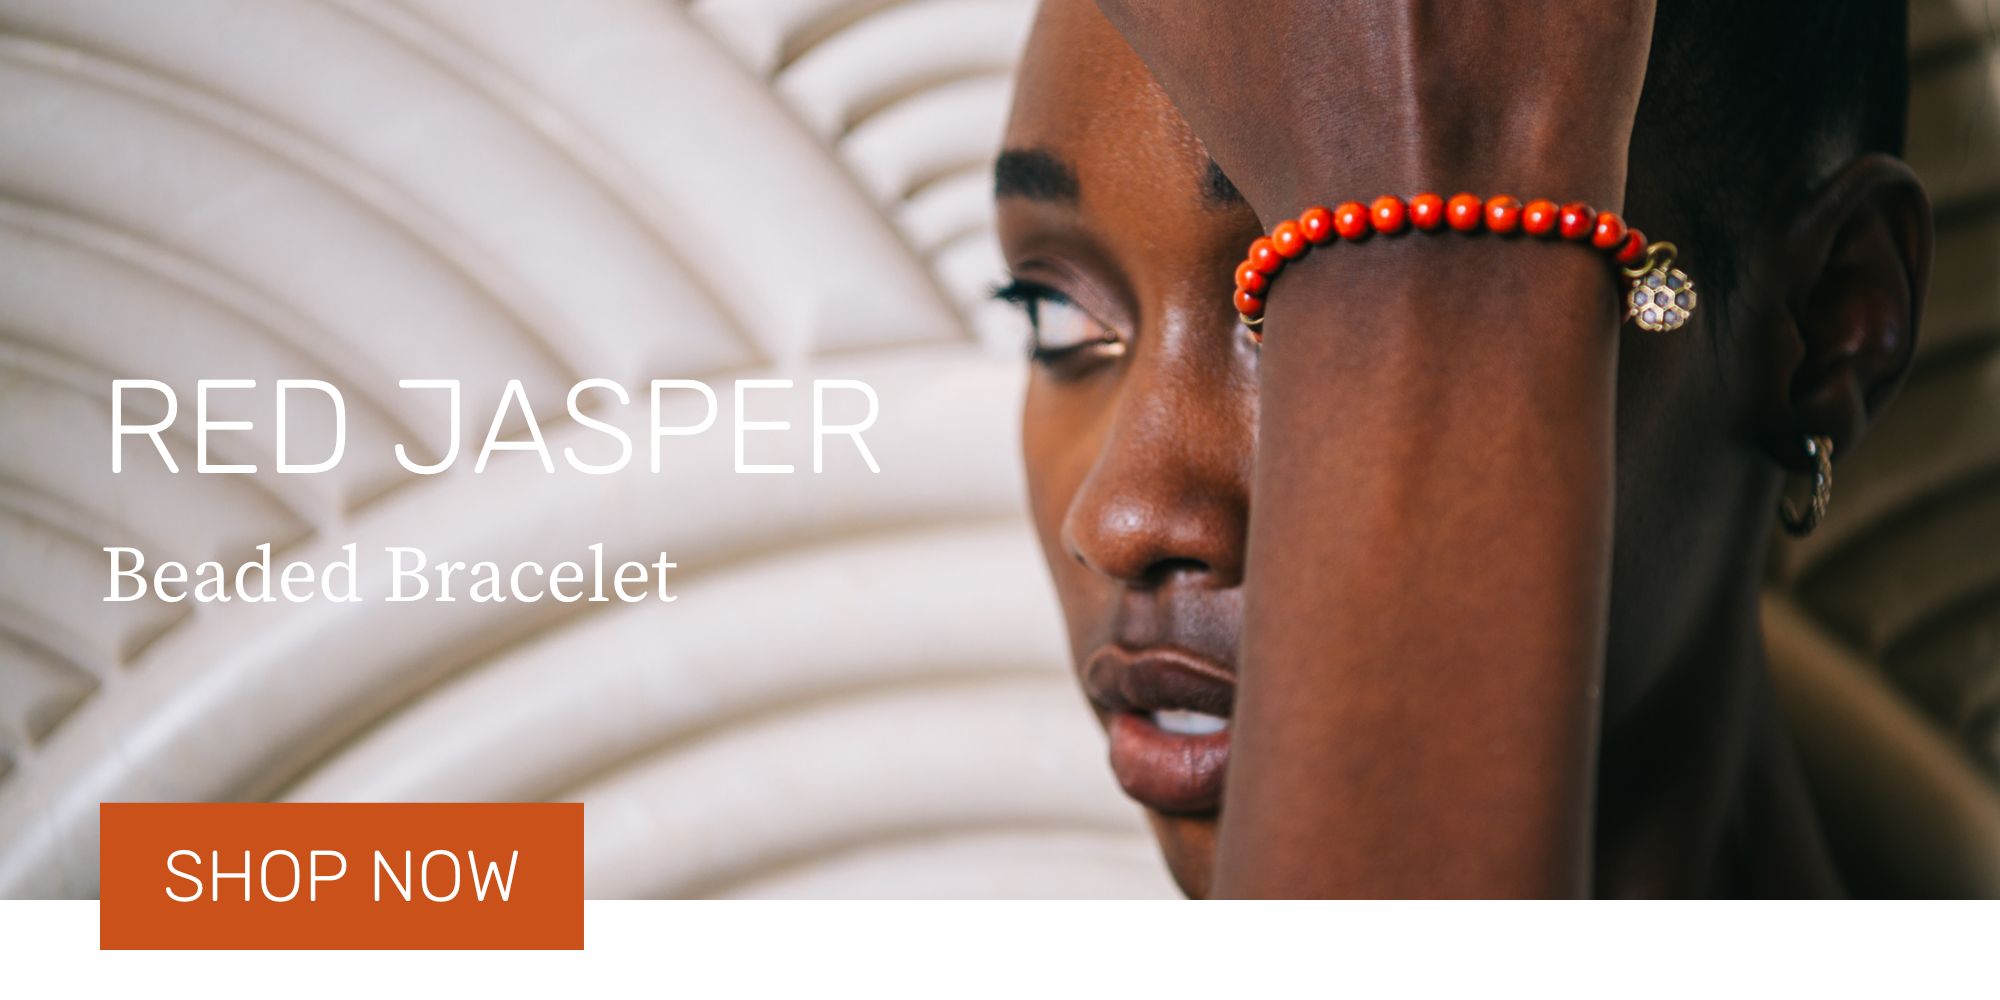 Red Jasper beaded bracelet by Wild In Africa